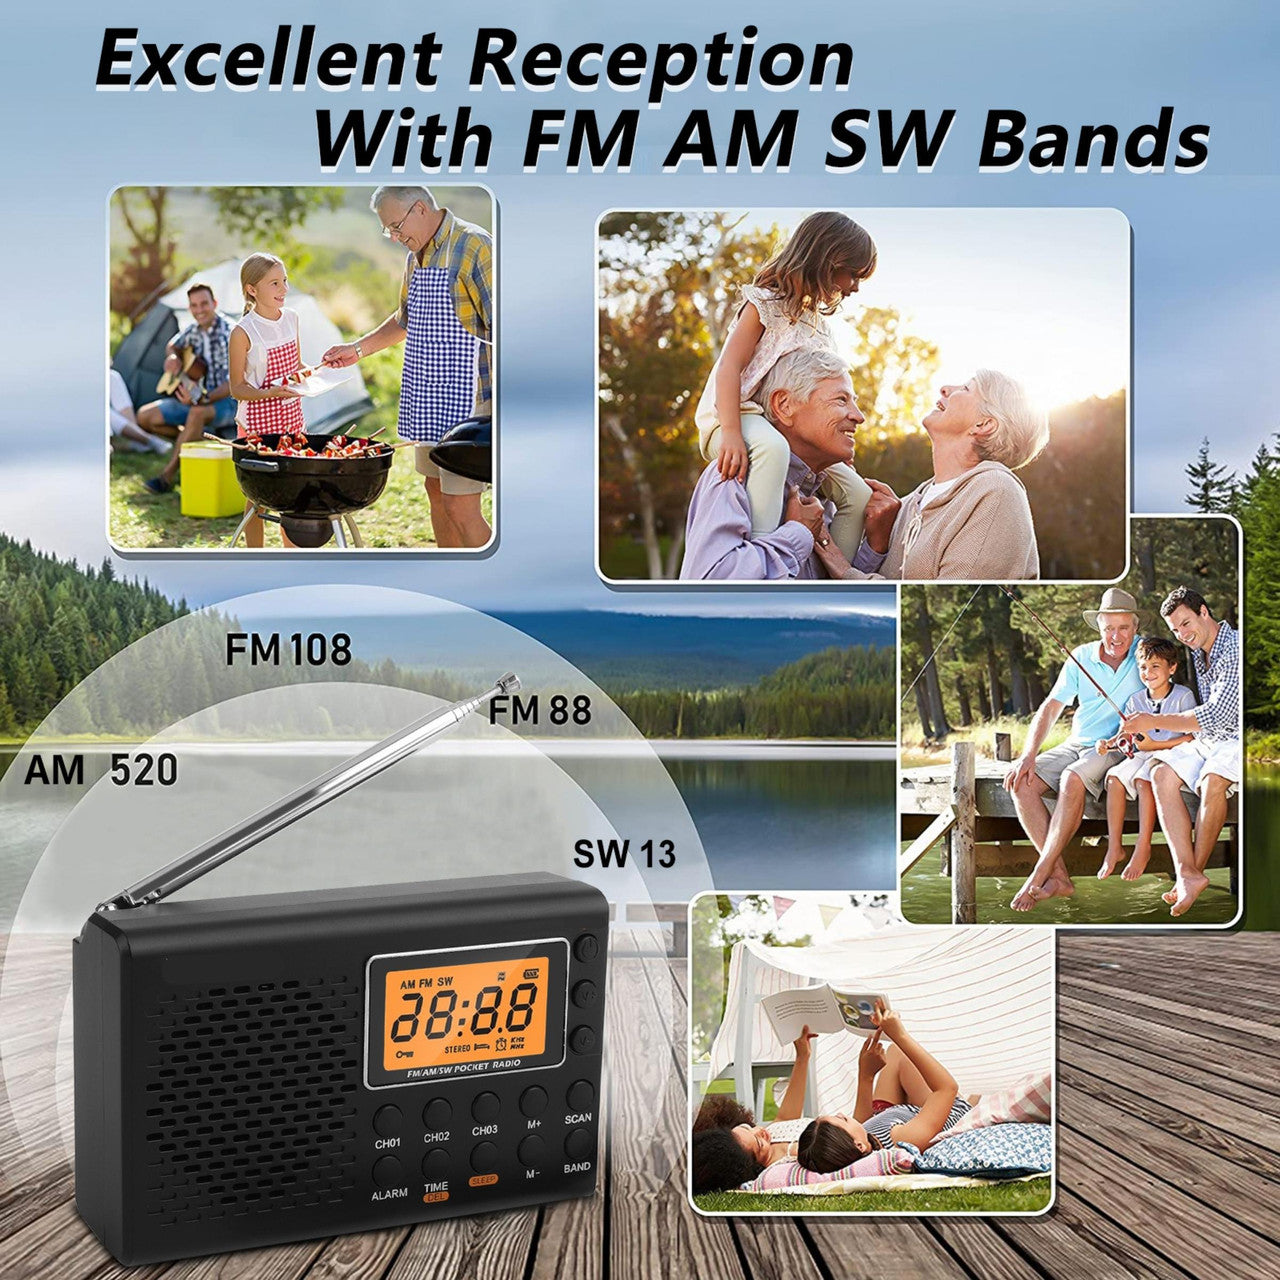 Multi-Band Portable Radio for Support Am/Fm/SW - Shortwave Radios Large LCD Screen USB Speaker Player Walkman 3.5 MM Headphone Jack